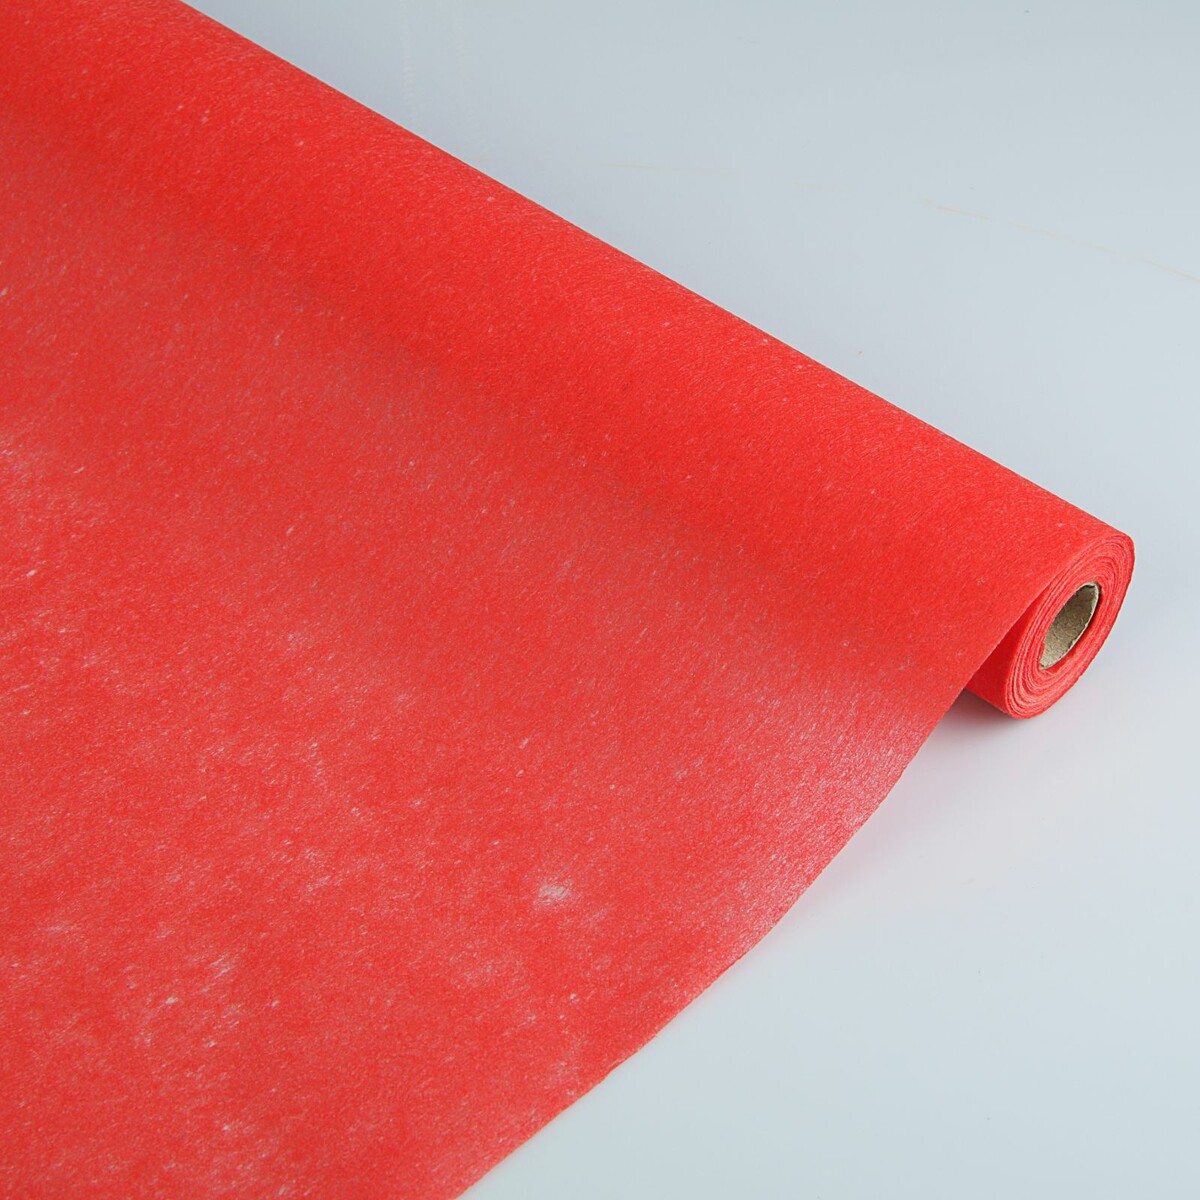 Фетр для упаковок и поделок, однотонный, красный, двусторонний, рулон 1шт., 50 см x 15 м фетр для декора и флористики однотонный белый двусторонний рулон 1шт 50 см x 15 м